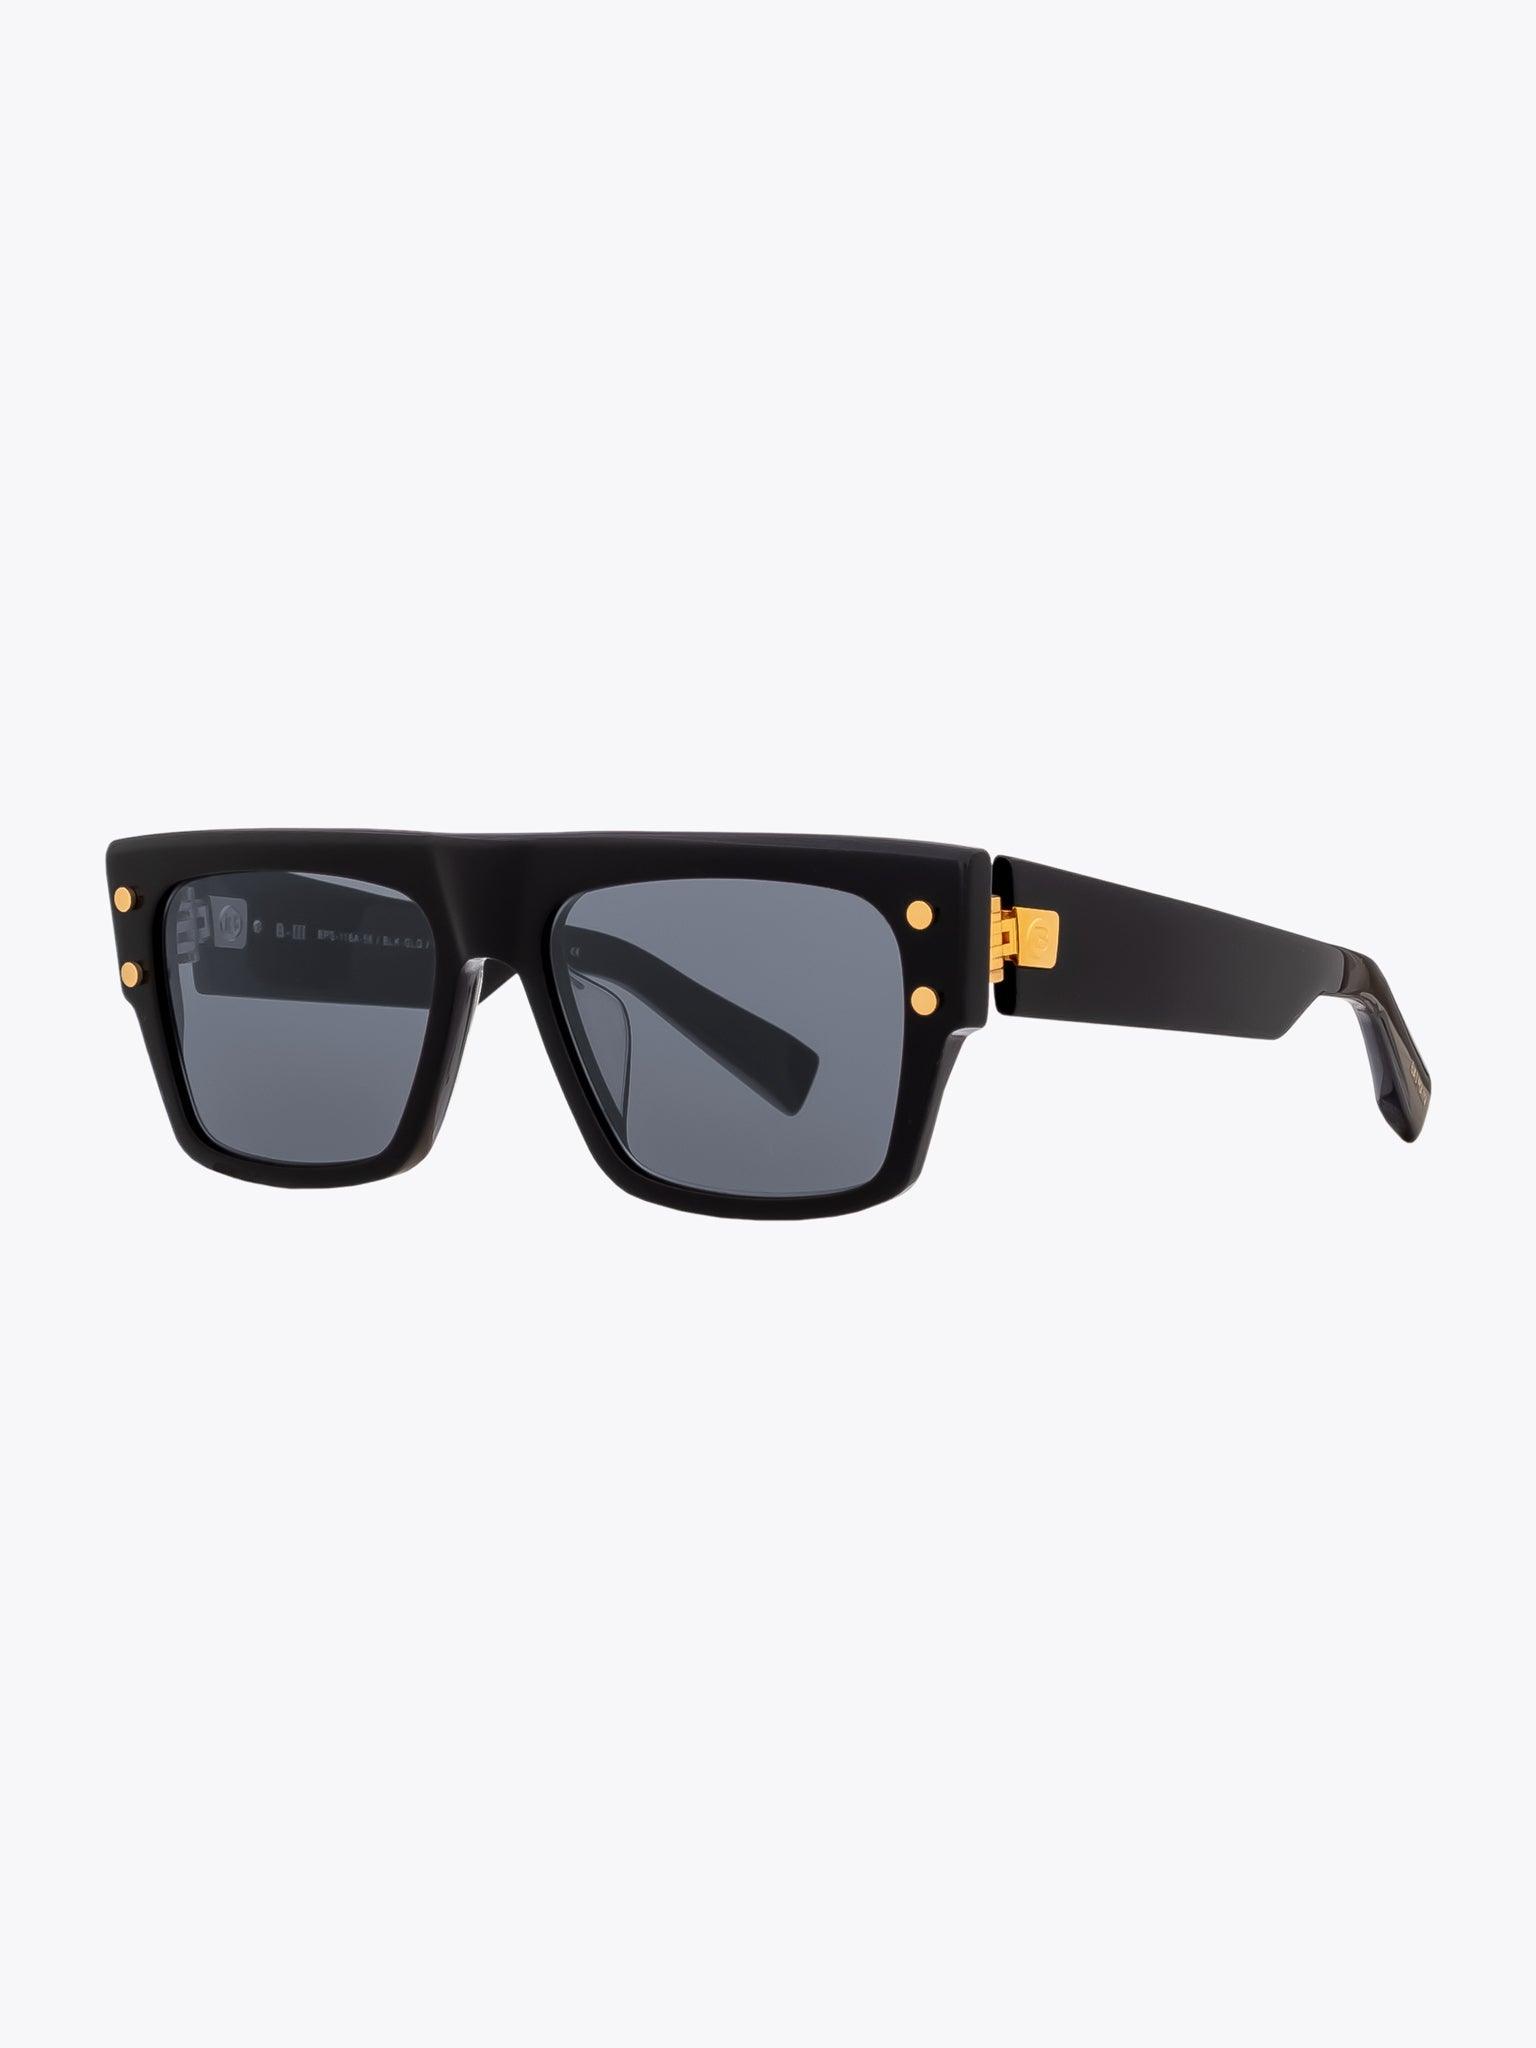 BALMAIN B-III Black Sunglasses